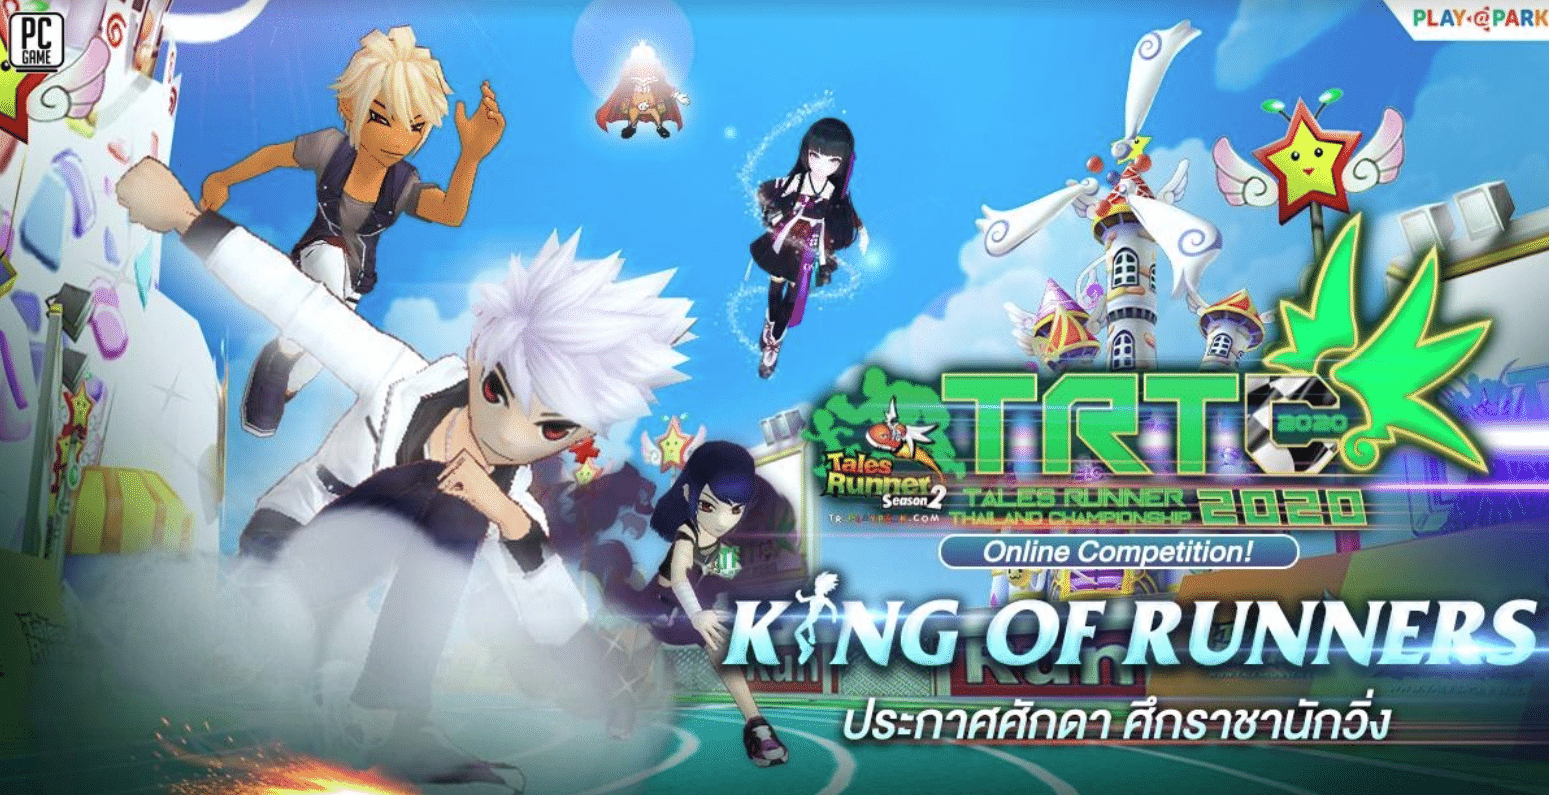 Tales Runner เปิดการแข่งขันระดับประเทศ เฟ้นหา TRTC 2020 “KING OF RUNNERS” แล้ววันนี้!